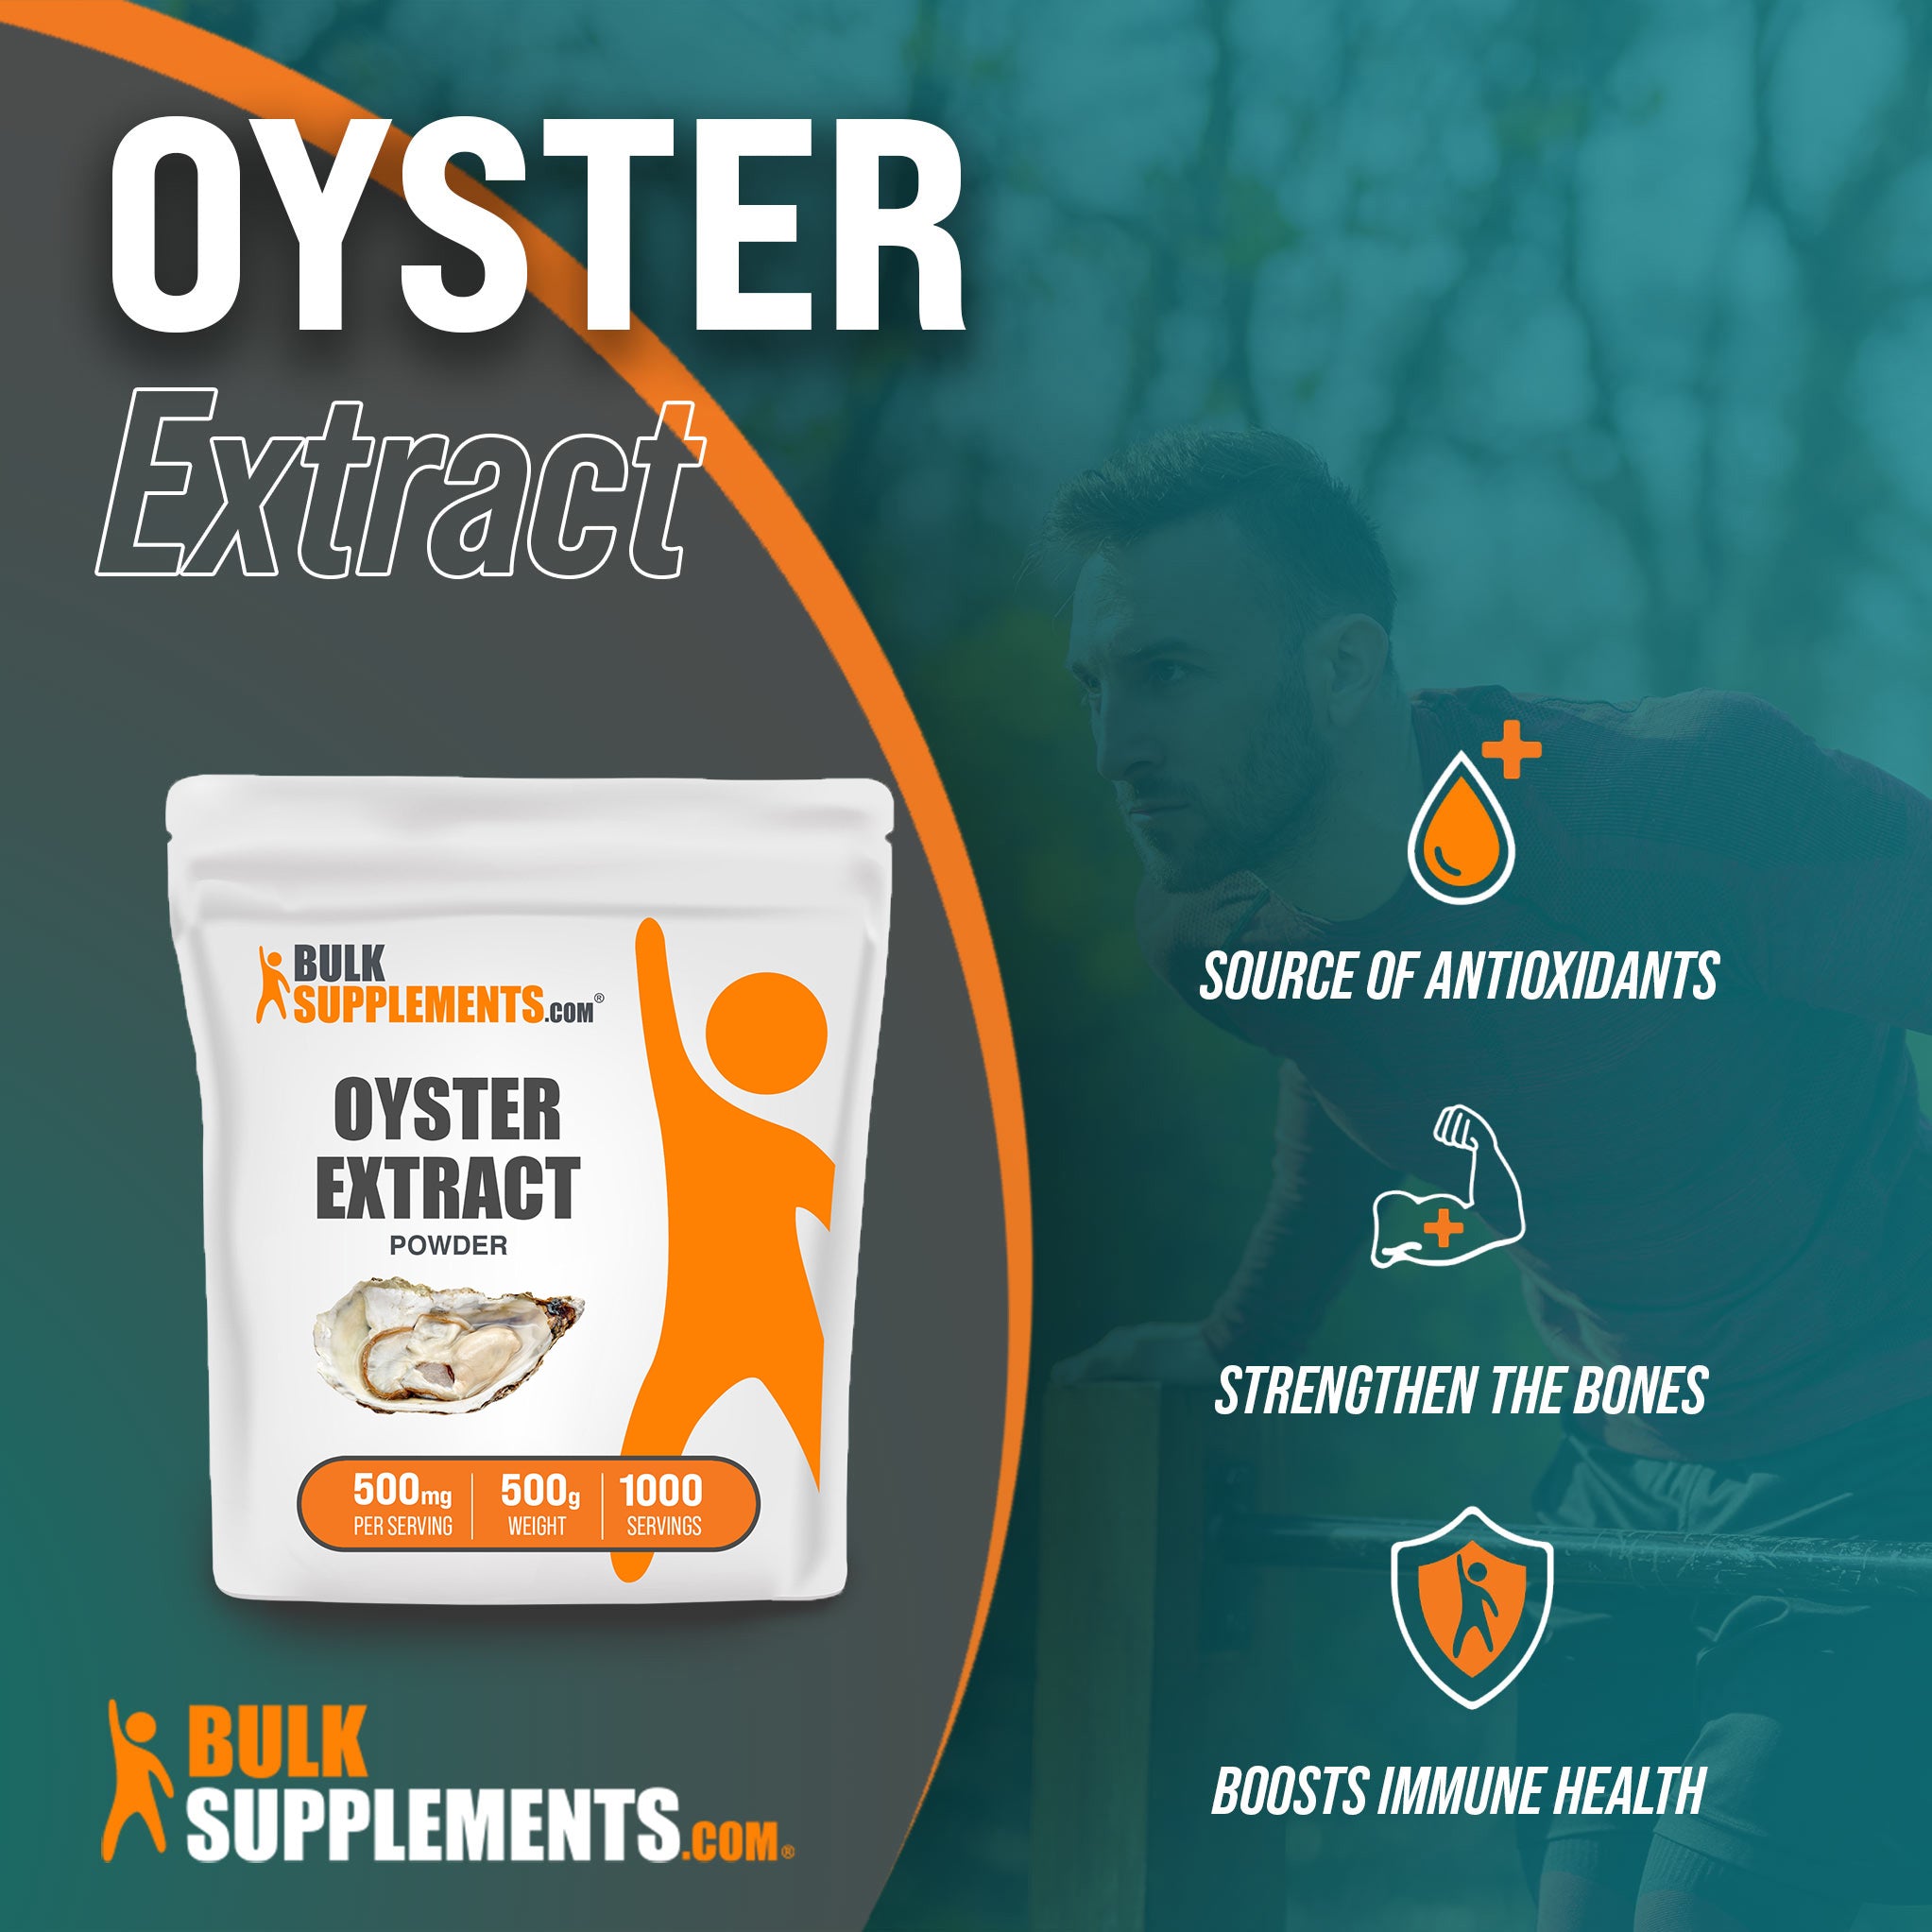 Benefits of Oyster Extract: source of antioxidants, strengthen the bones, boosts immune health